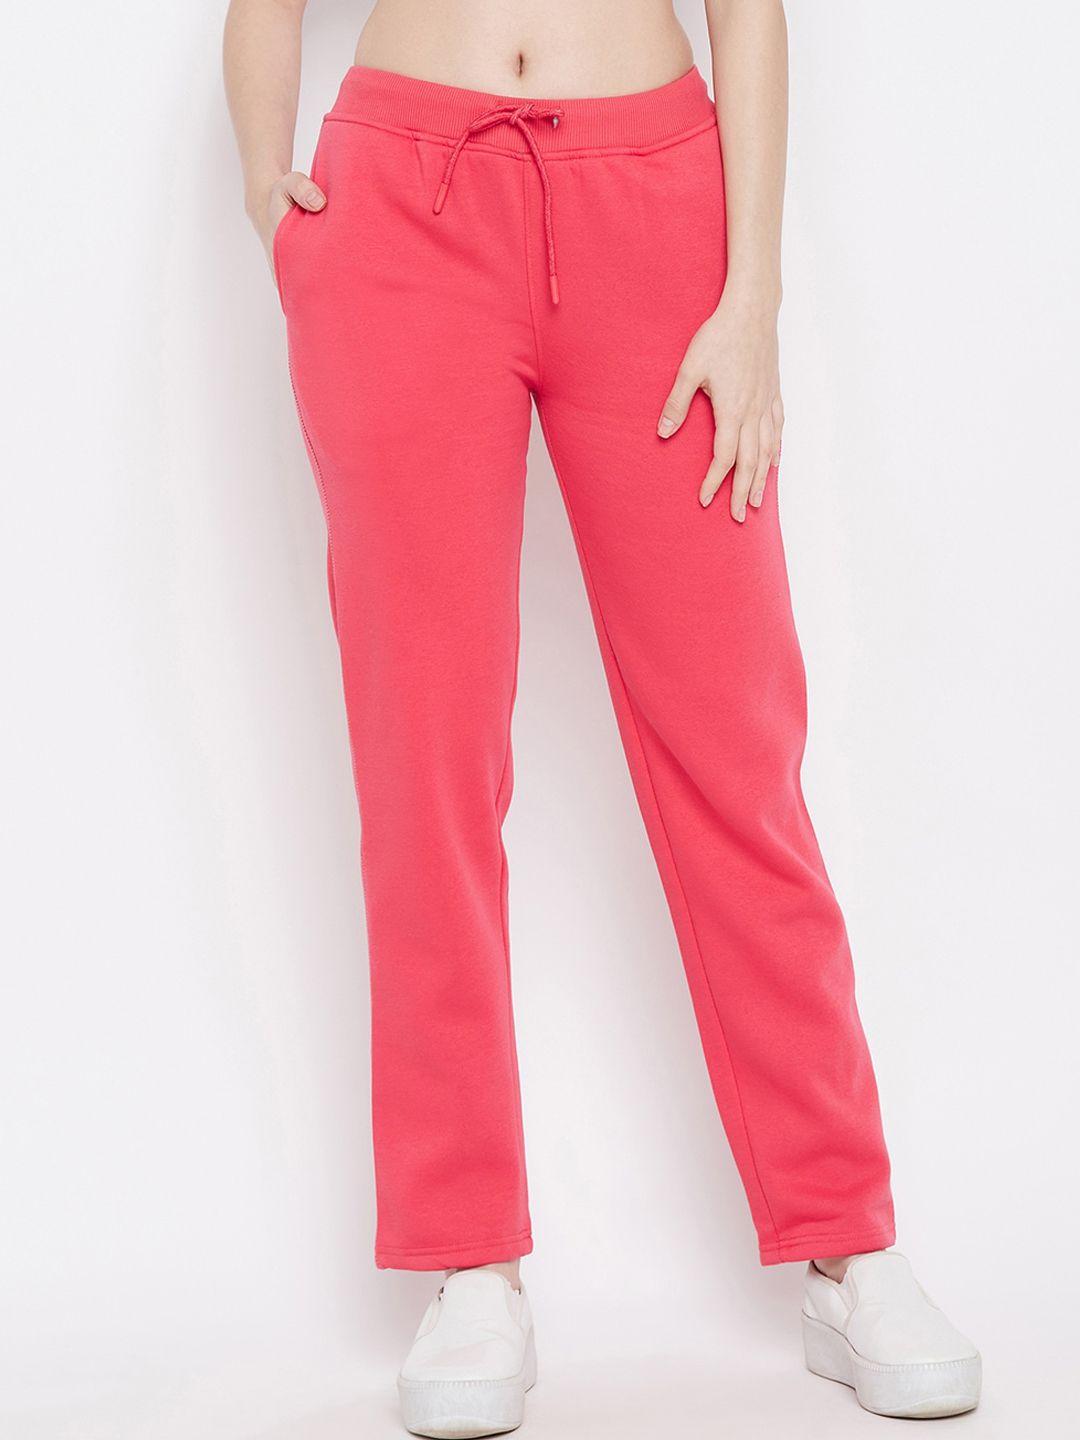 duke women pink solid cotton track pants